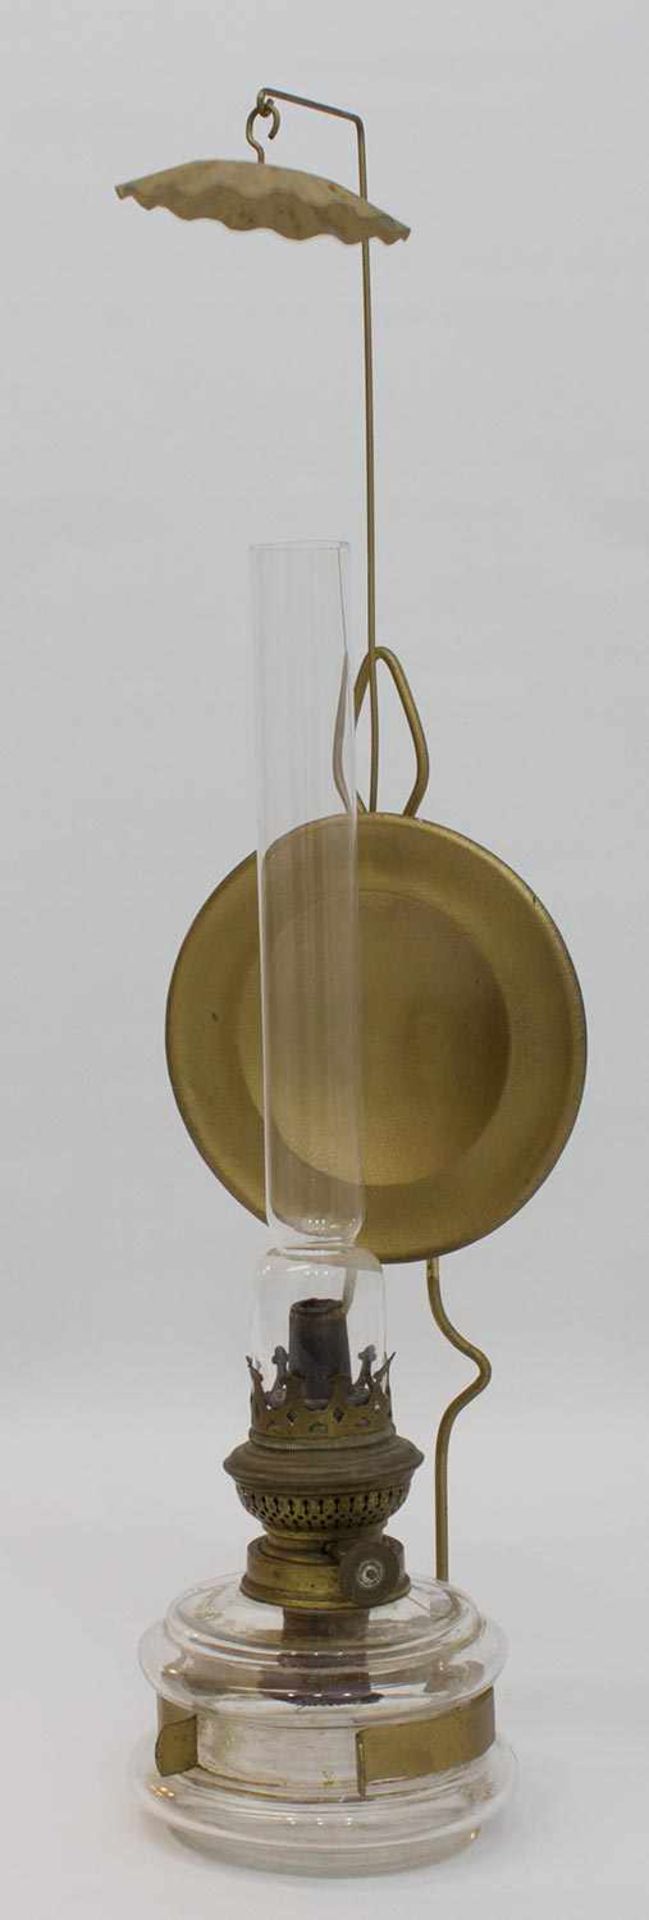 Wandpetroleumlampe um 1900, Glasbehälter, verschiebbarer Blaker, H. 37 cm